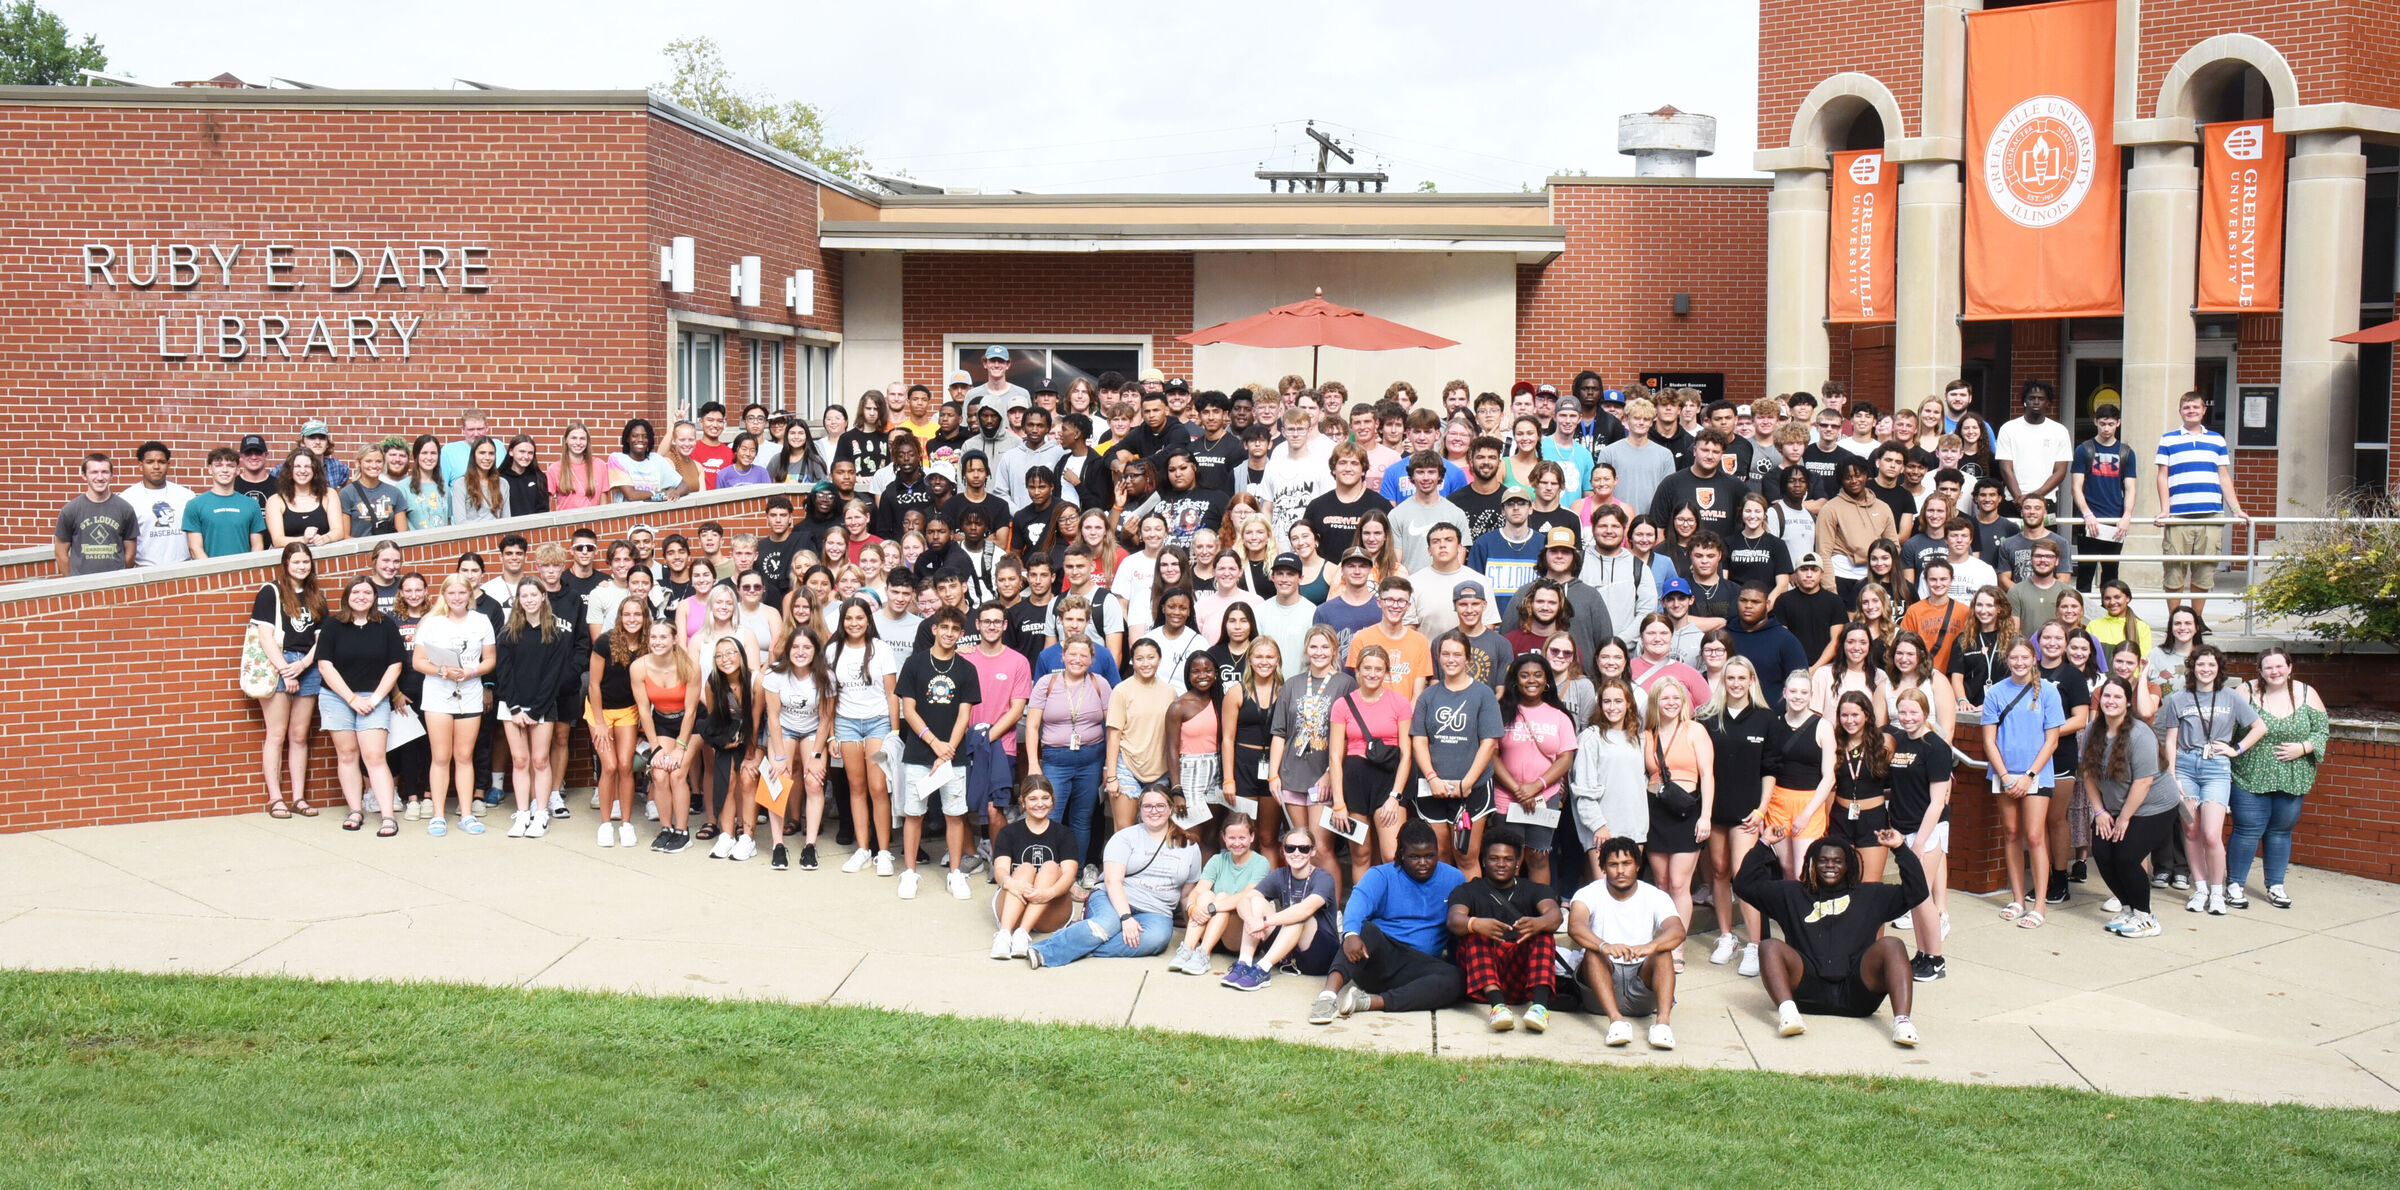 Freshman class at Greenville University termed 'overcomers'